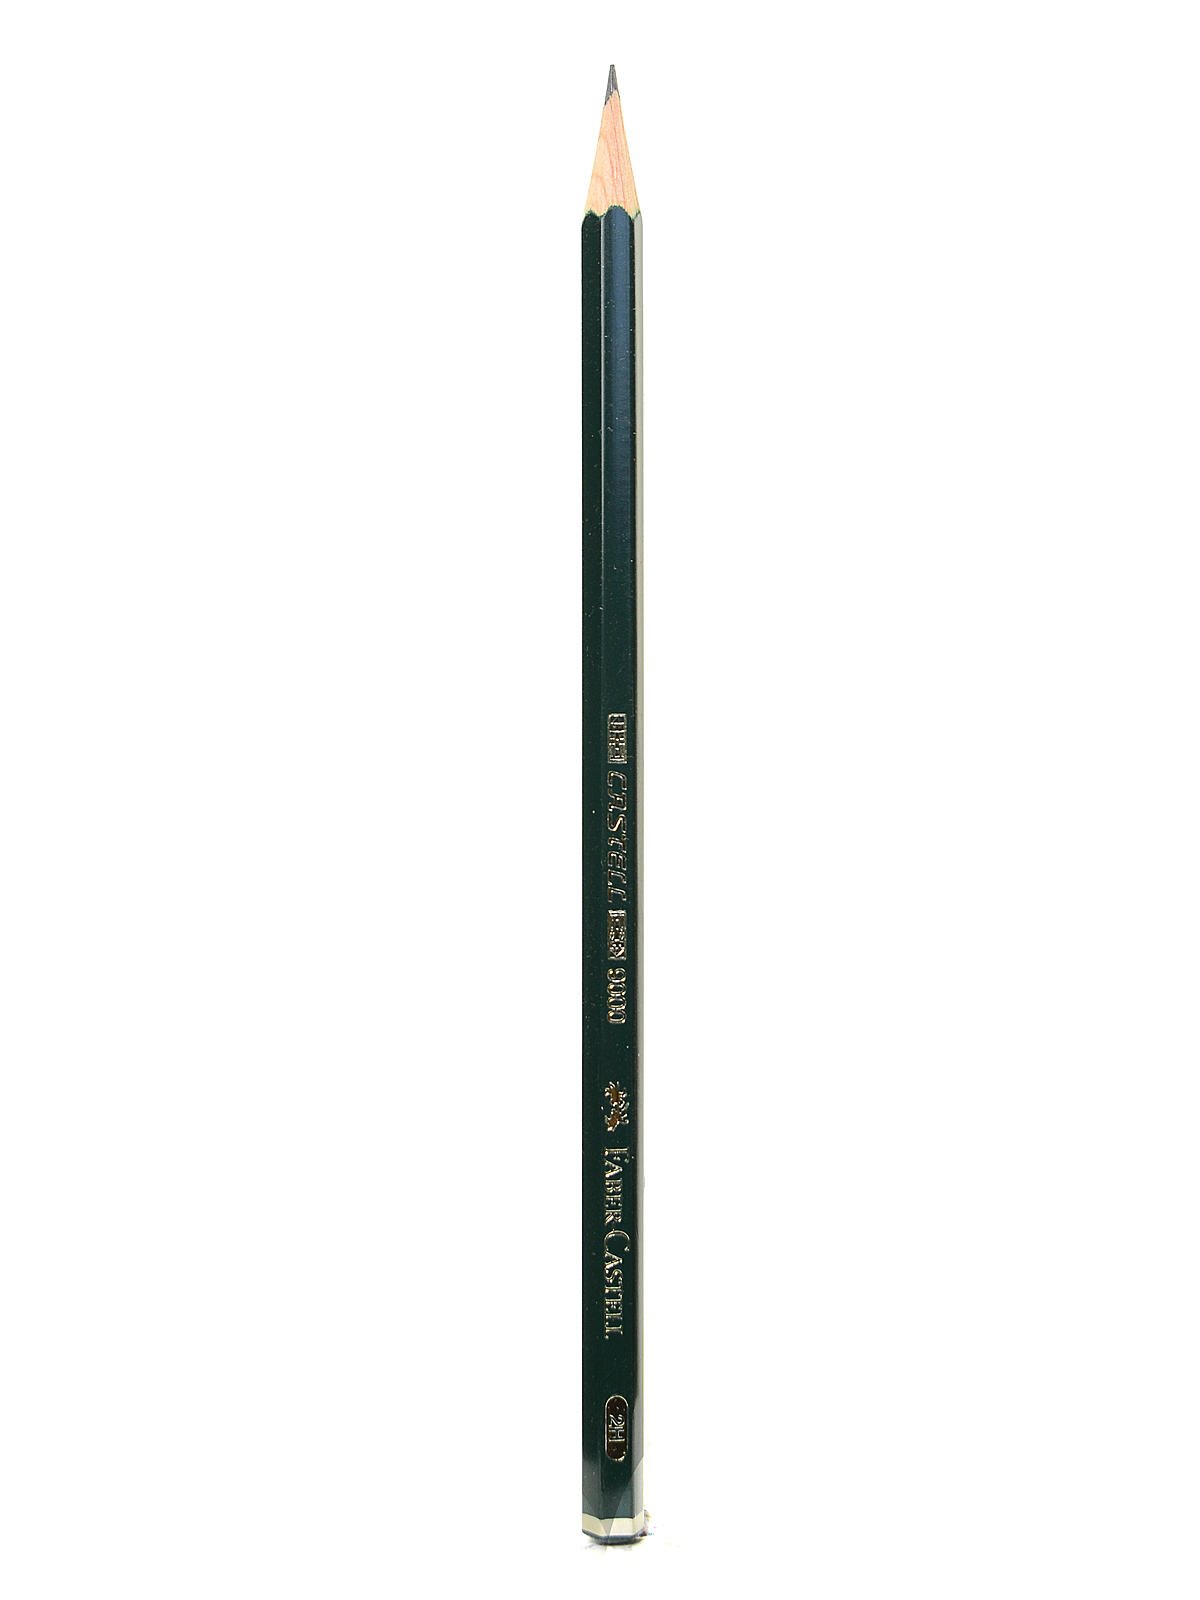 Faber-Castell Pencils, Castell 9000 Artist Graphite 2H Pencils for